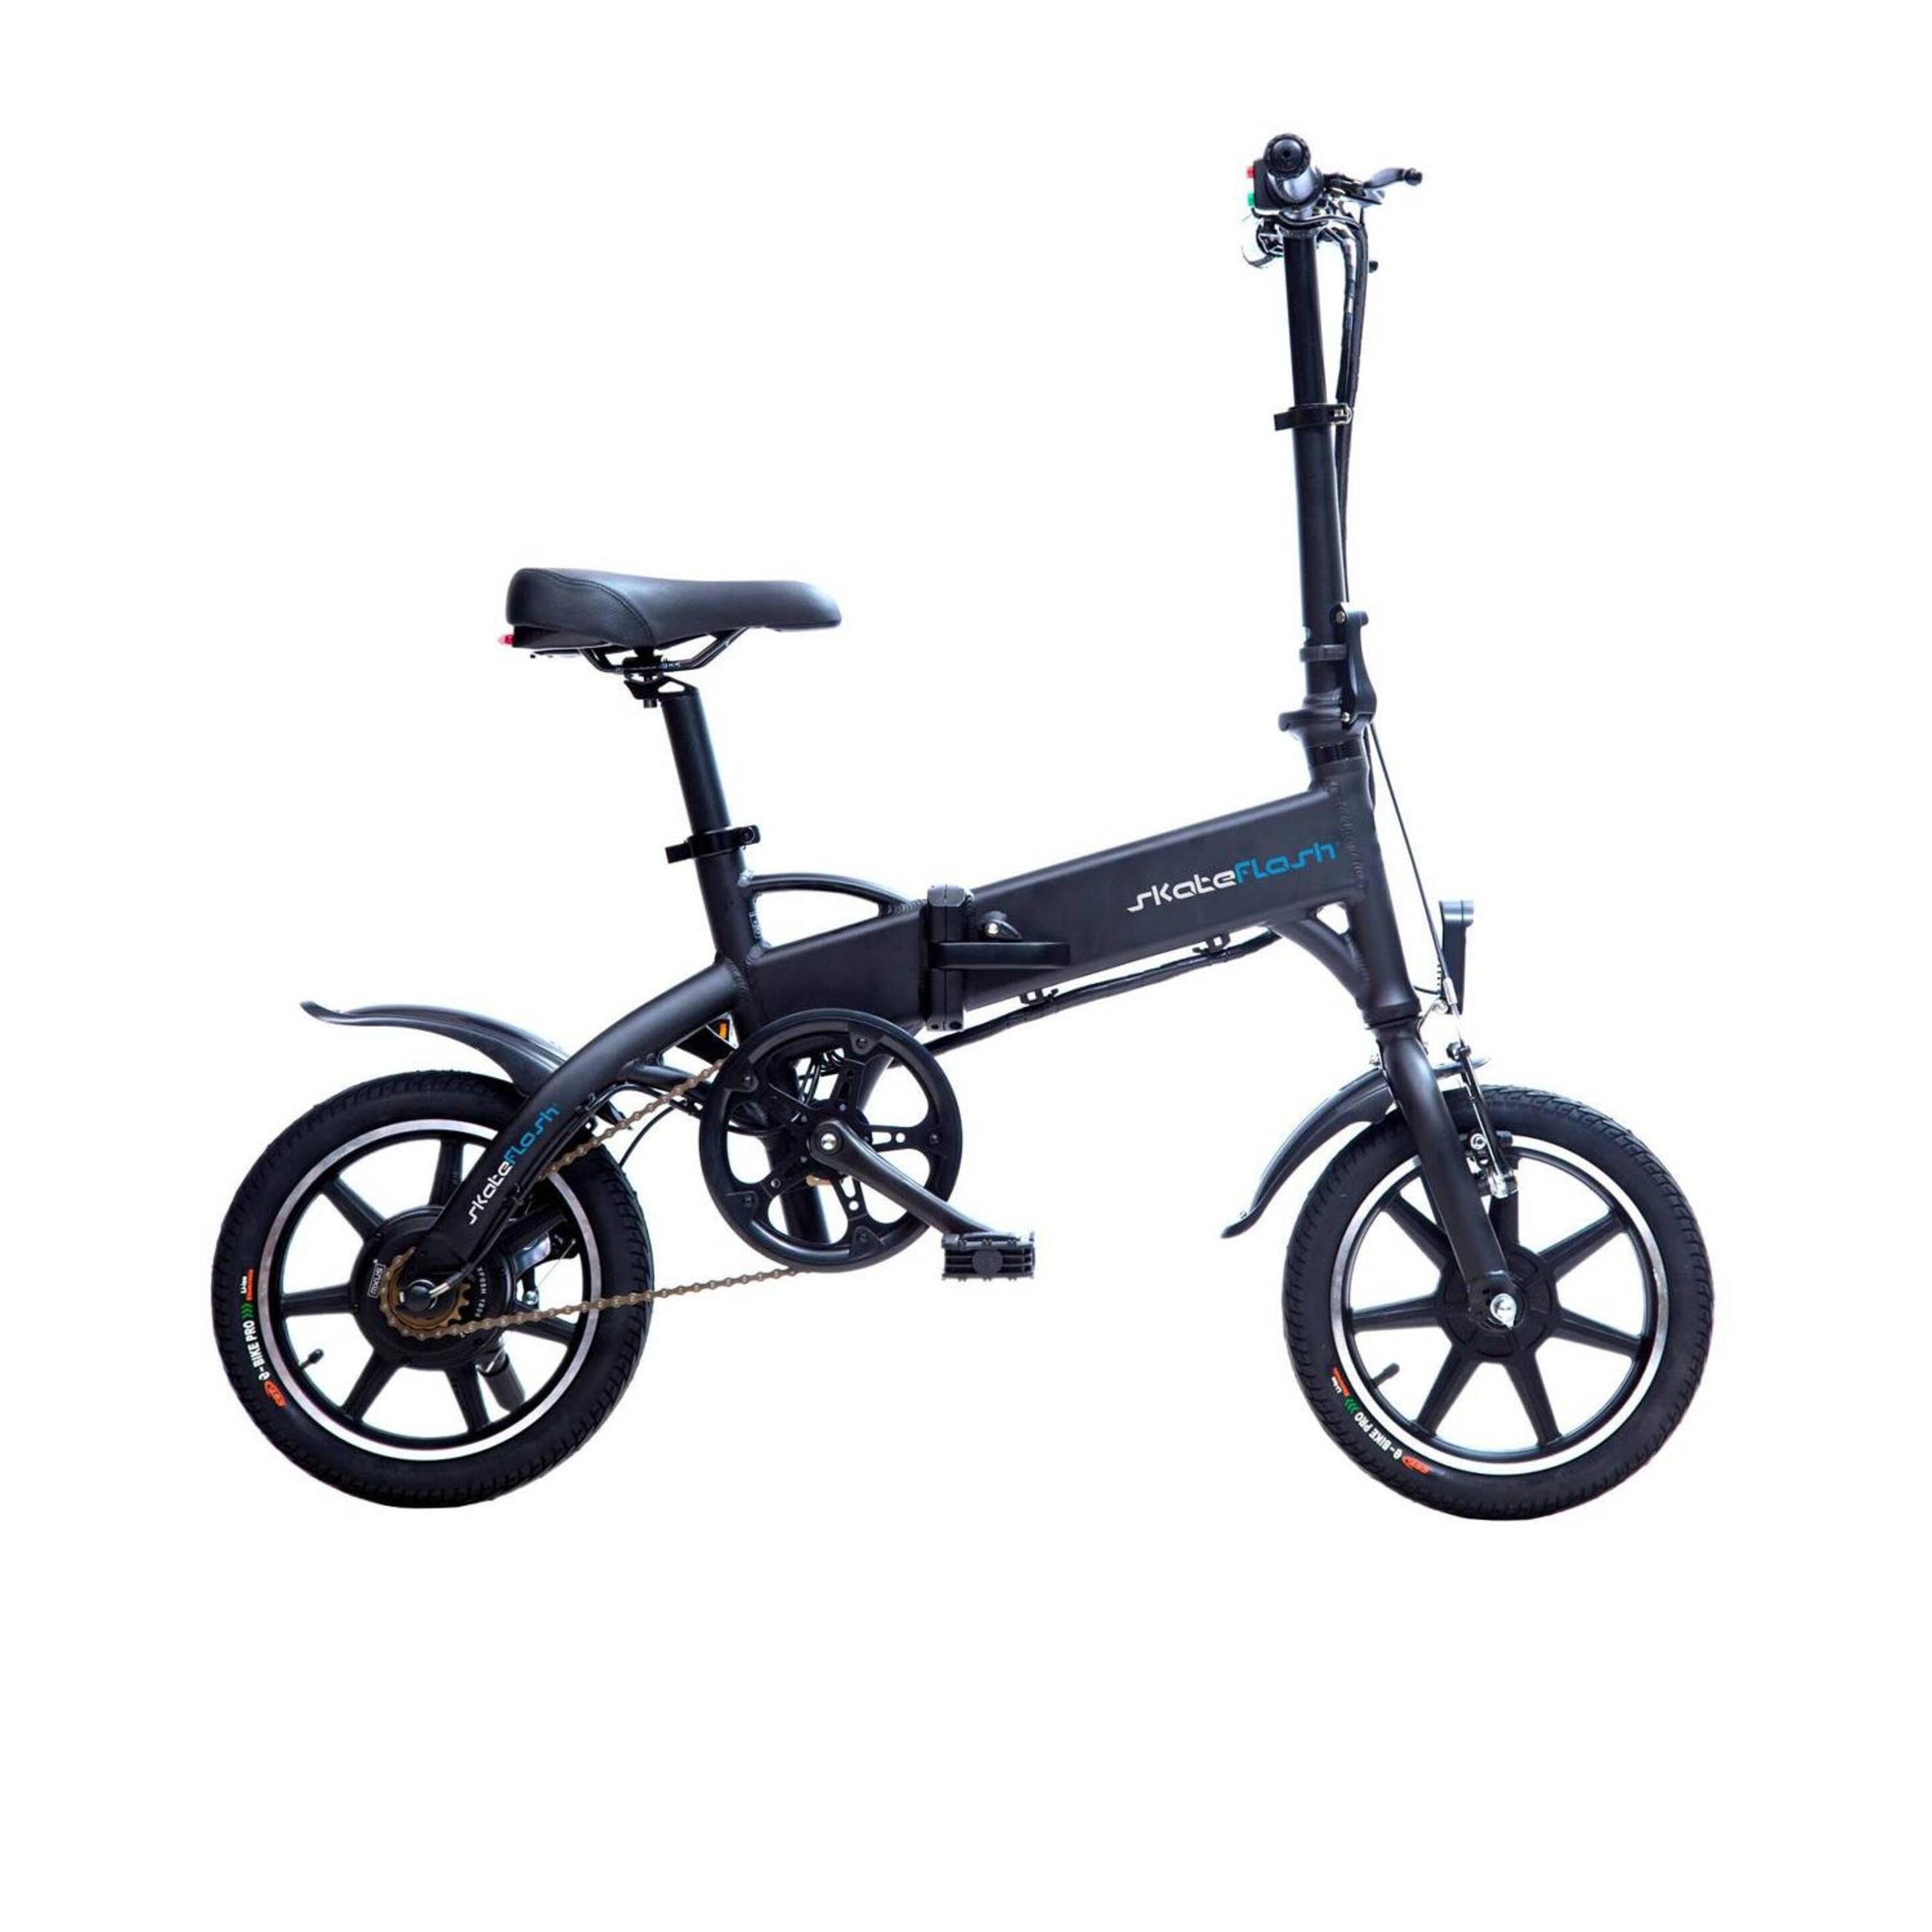 Bici Eléctrica Skateflash Compact - Negro - Bicicleta  MKP